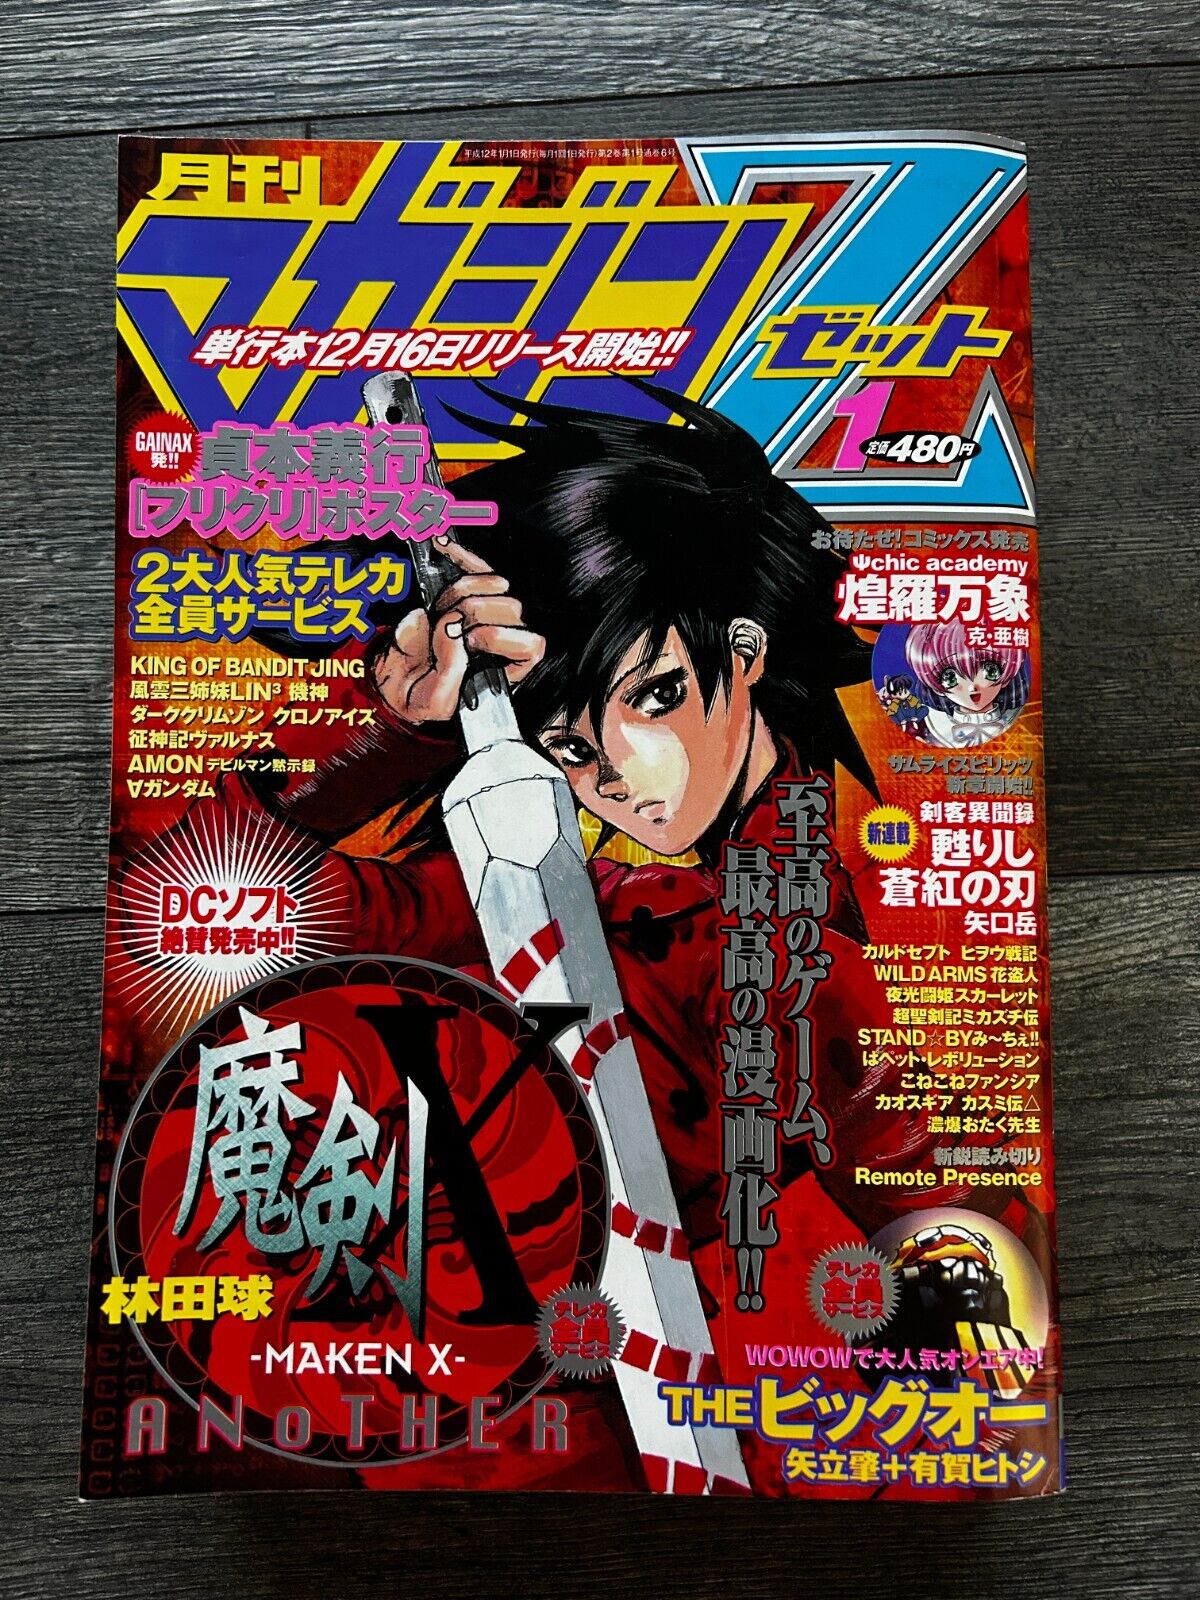 MONTHLY MAGAZINE Z January 2000 Issue #6 Manga Anime w/ Poster Japan Japanese